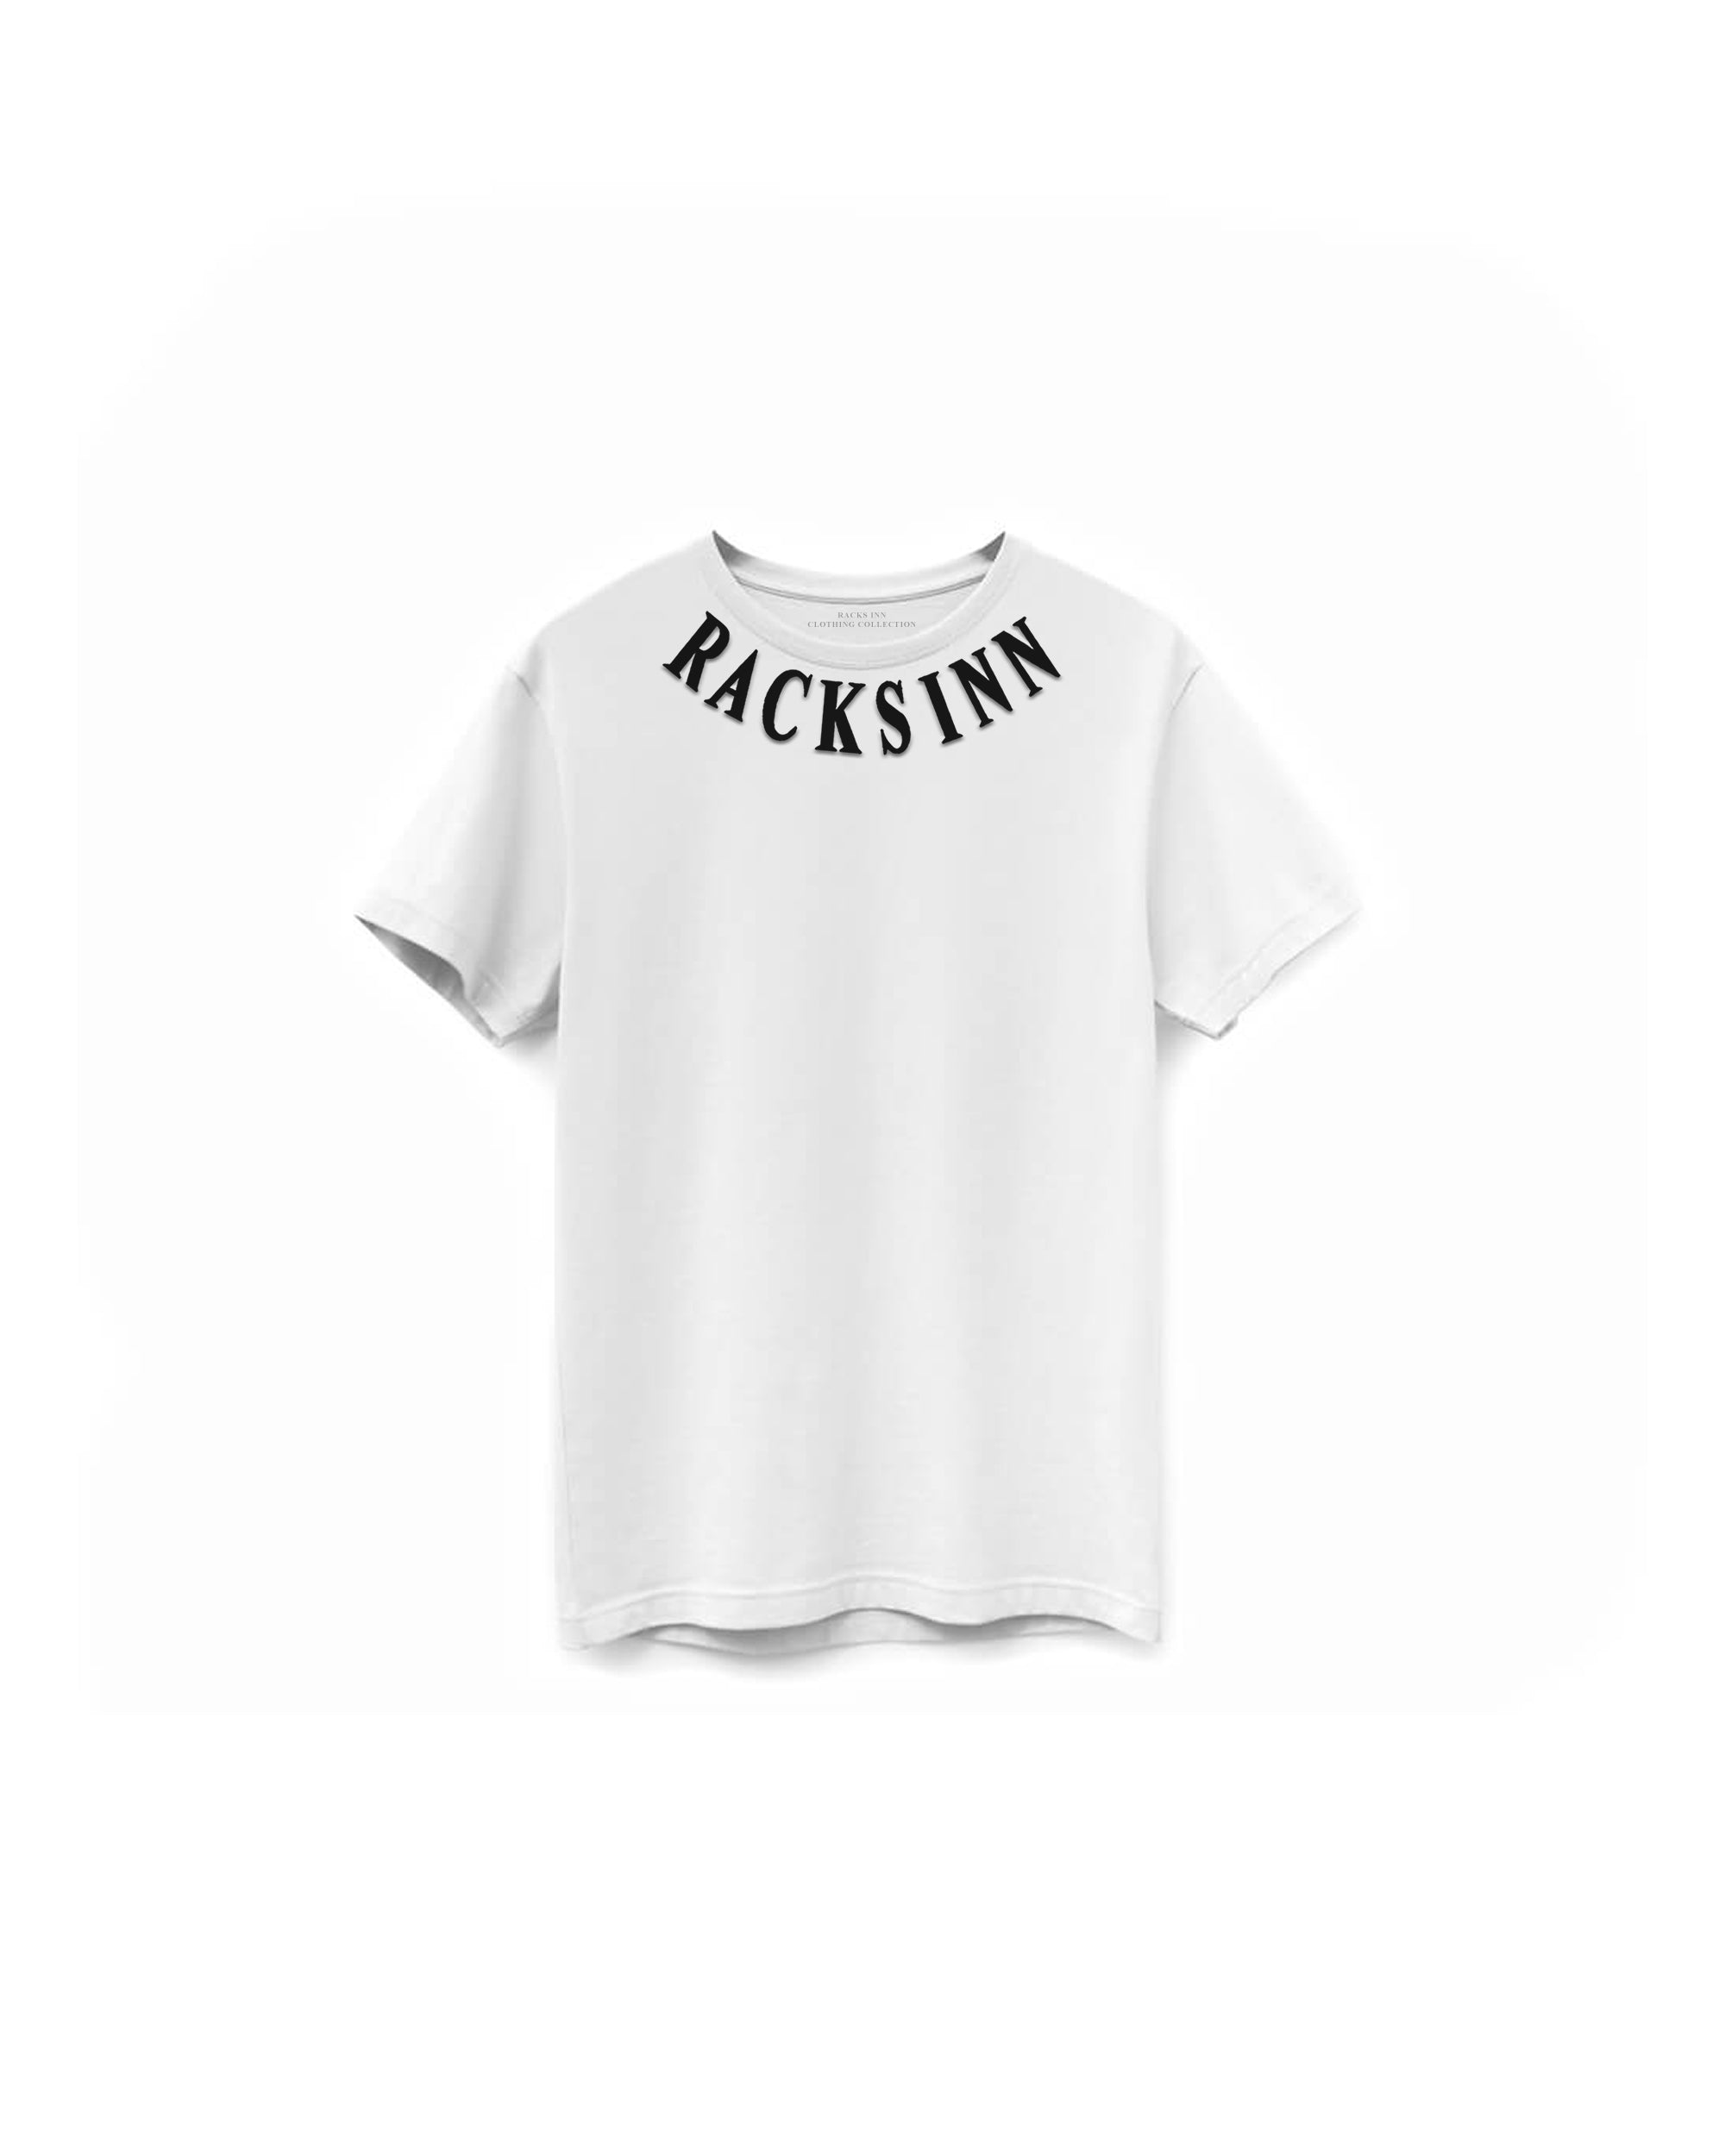 Racks Collar T-Shirt - White